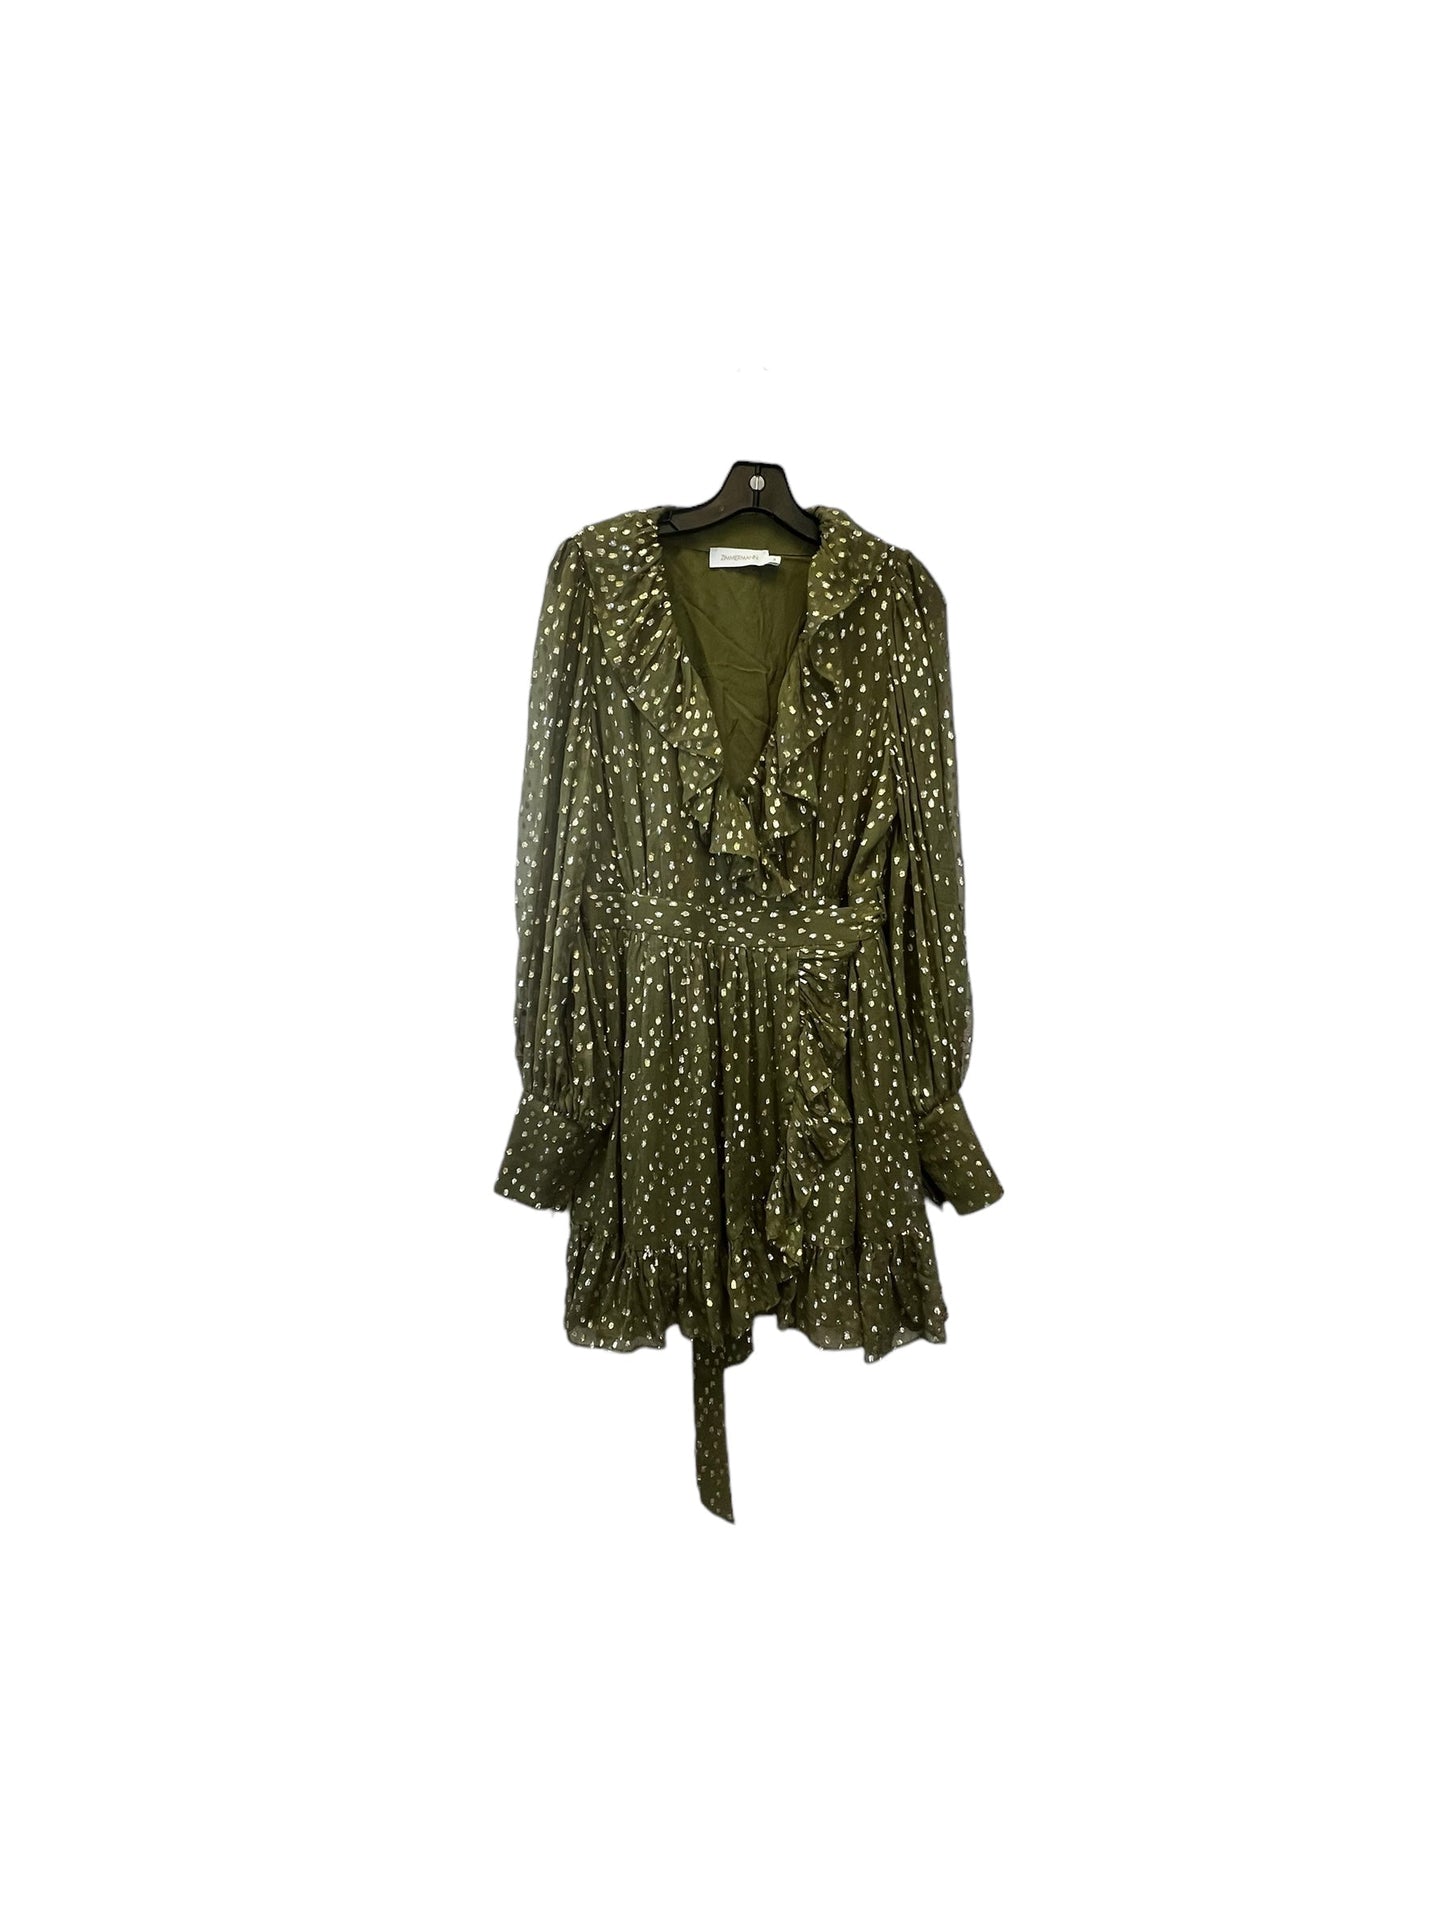 Gold & Green Dress Designer Zimmermann, Size S